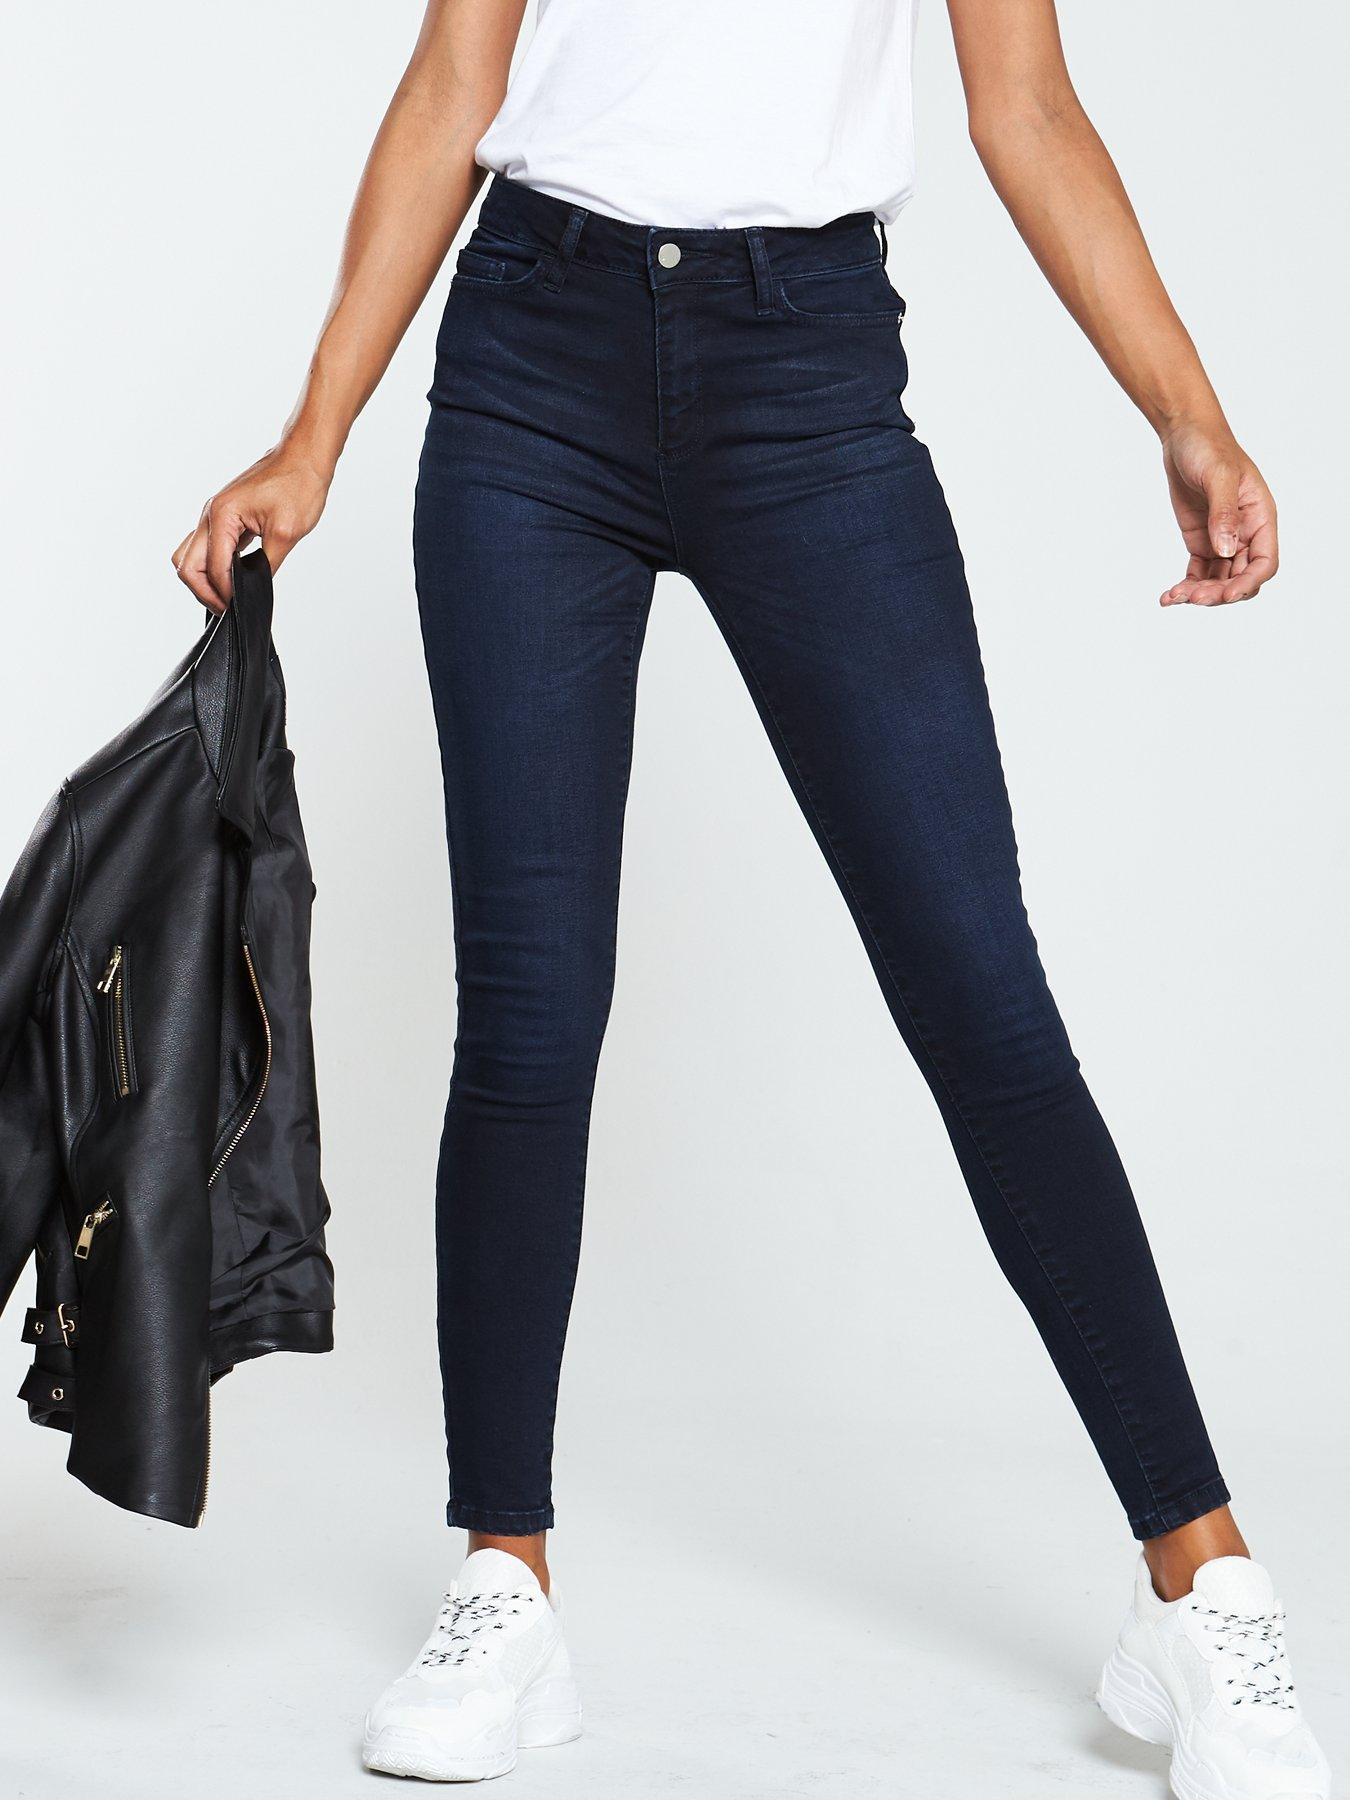 Women's Ultra High-Rise Black Super Skinny Jeans, Women's Clearance